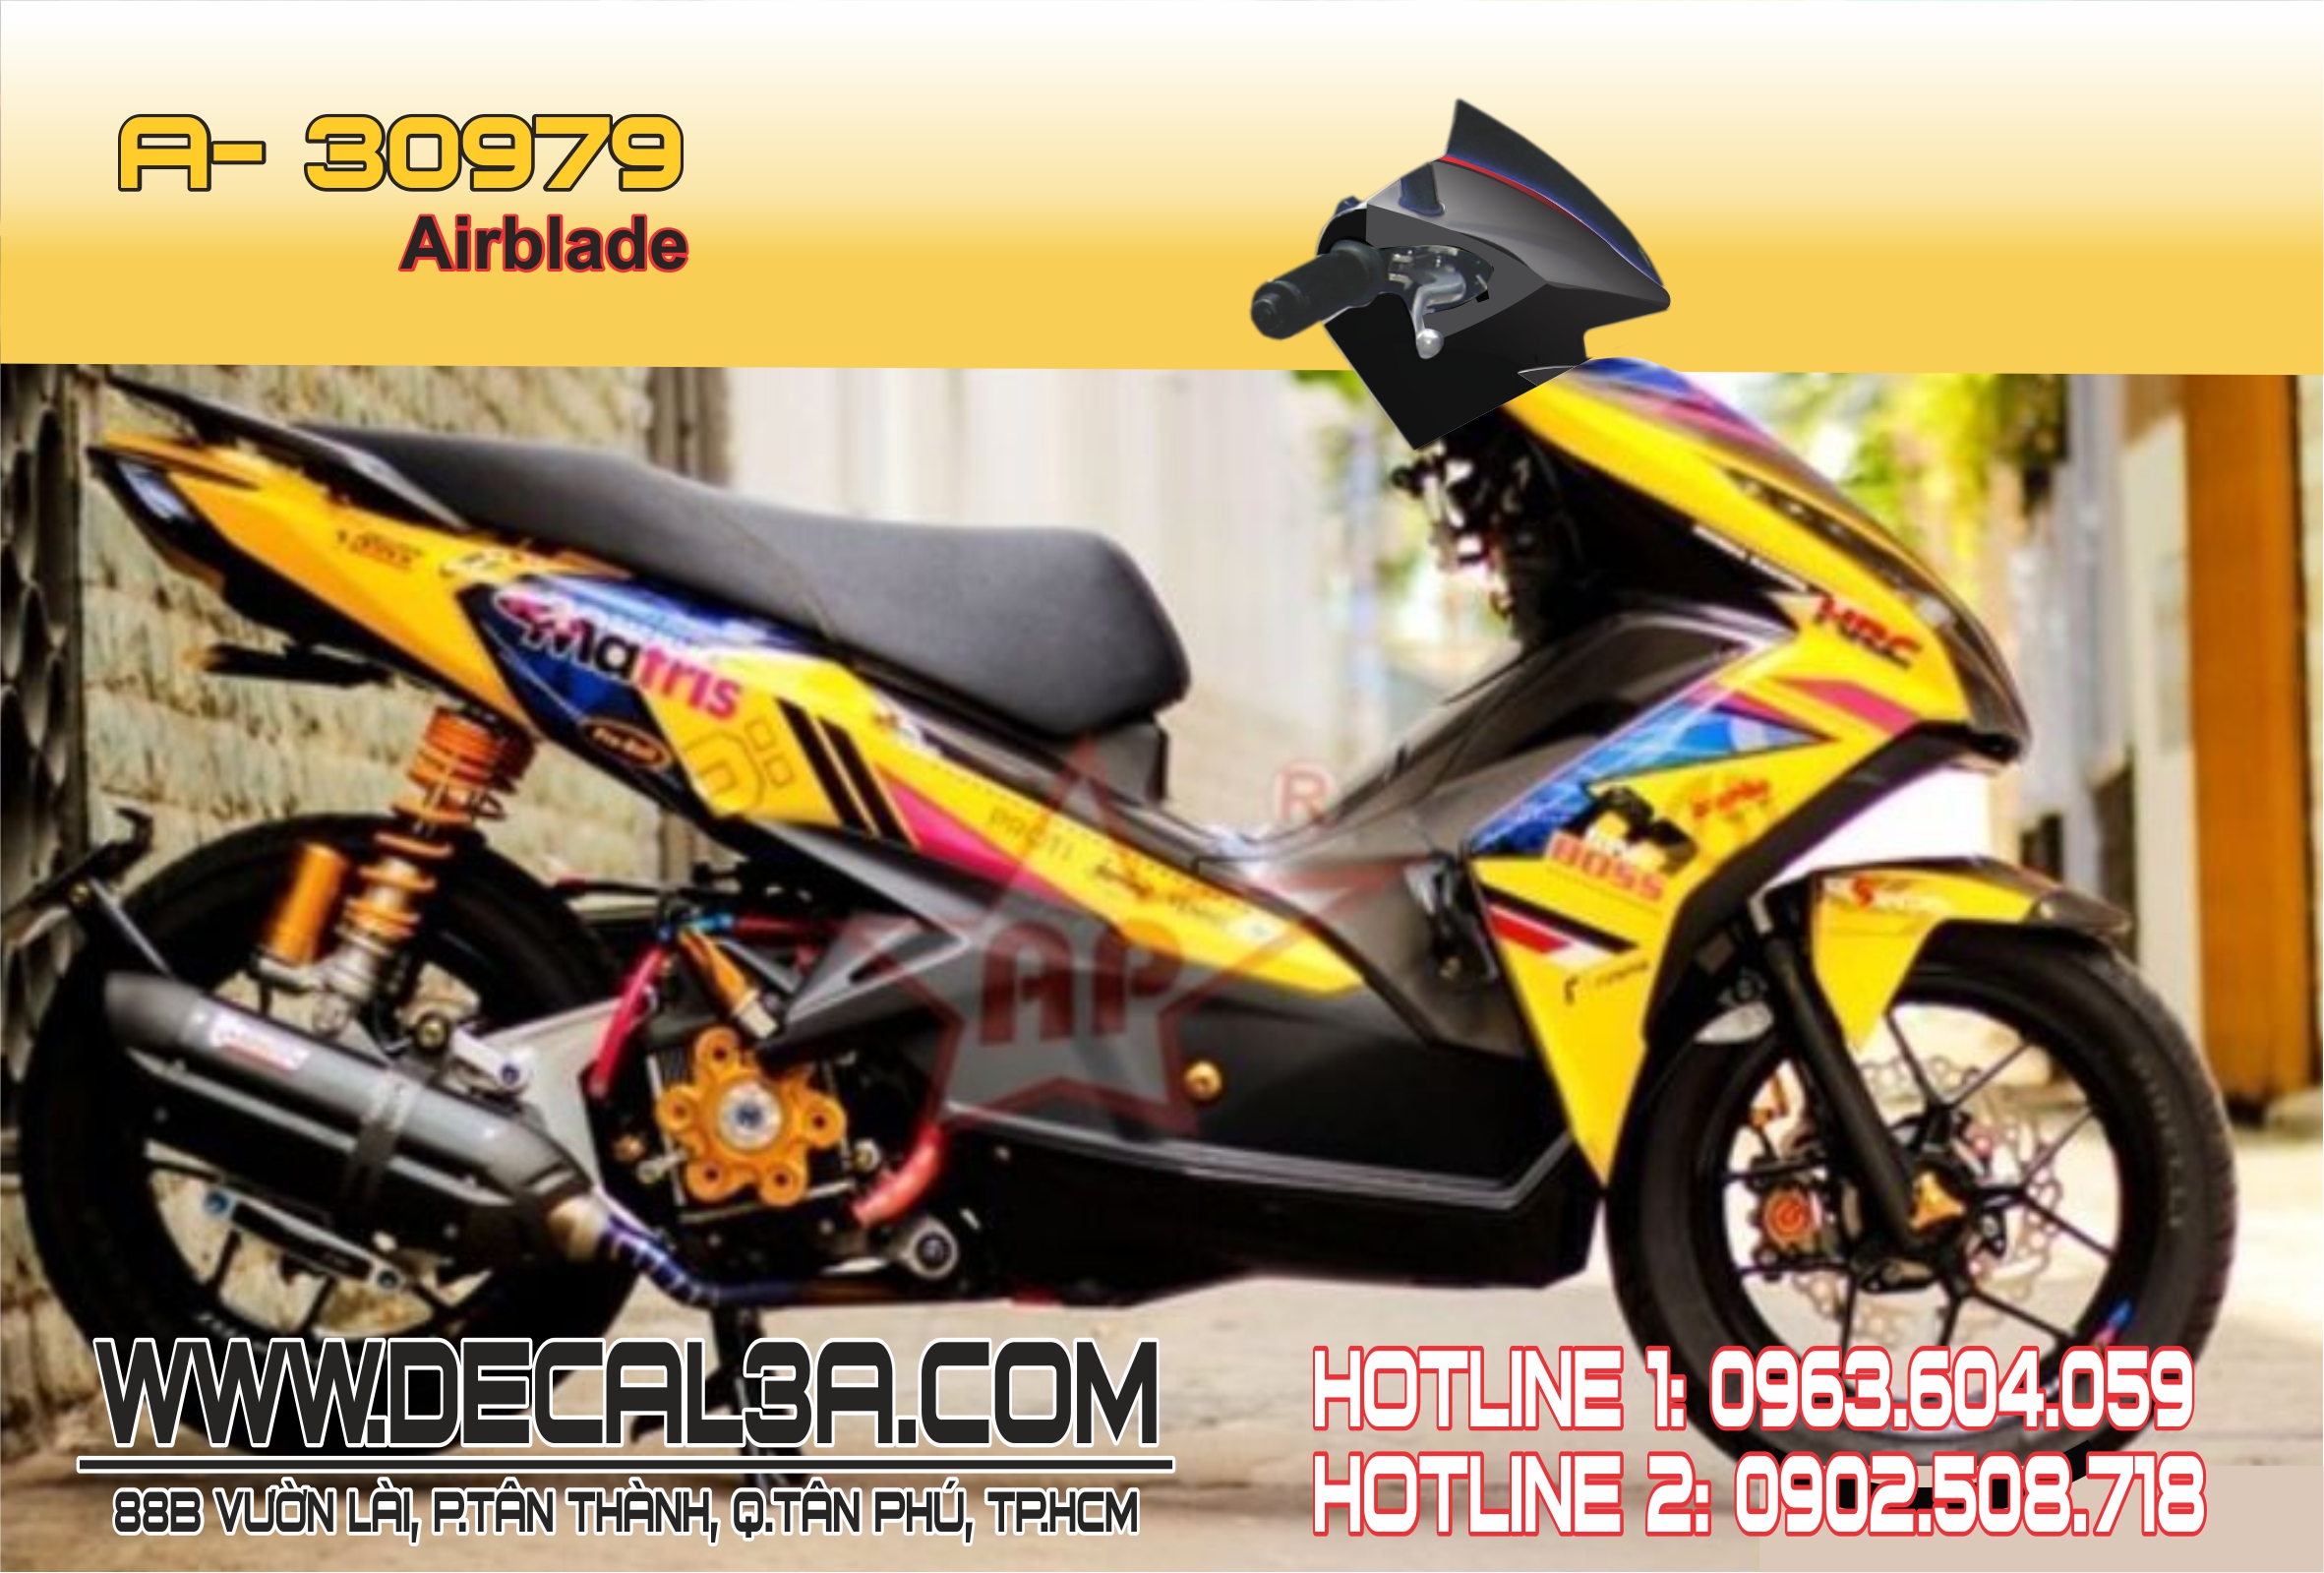 AirBlade Matris - A 30979